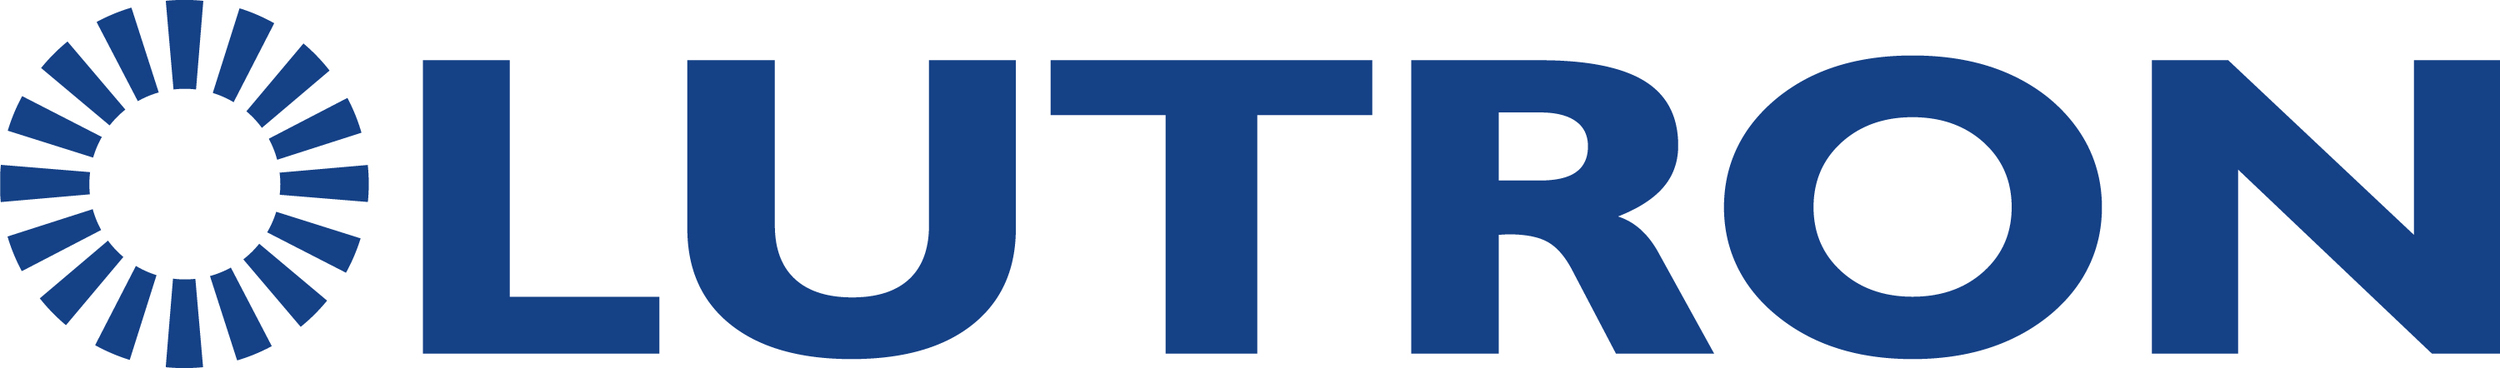 Lutron Logo.jpg